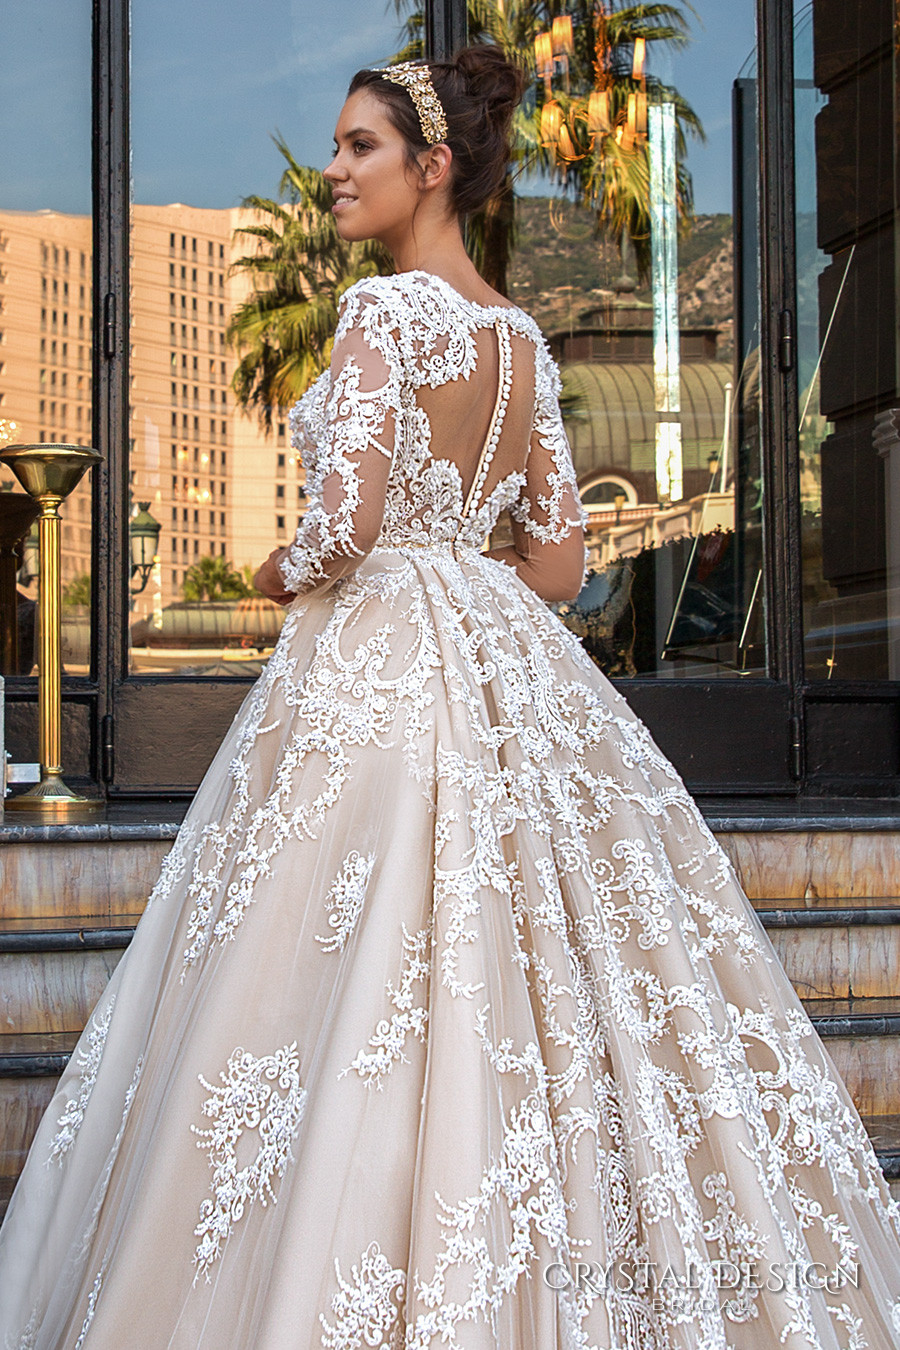 Customize Wedding Dress
 Crystal Design 2017 Wedding Dresses — Haute Couture Bridal